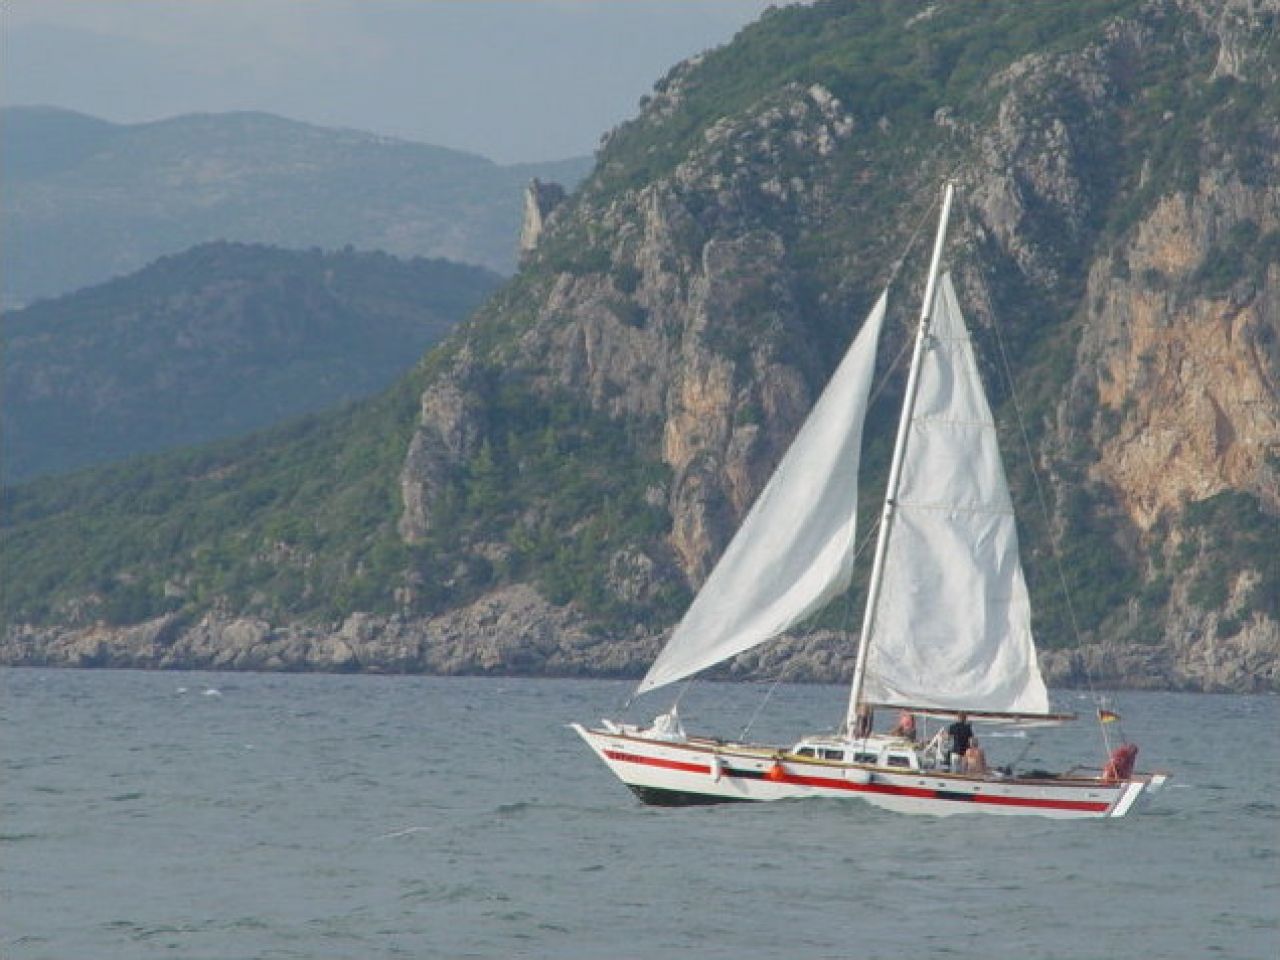 Catamaran saling against a backdrop of dramatic cliffs